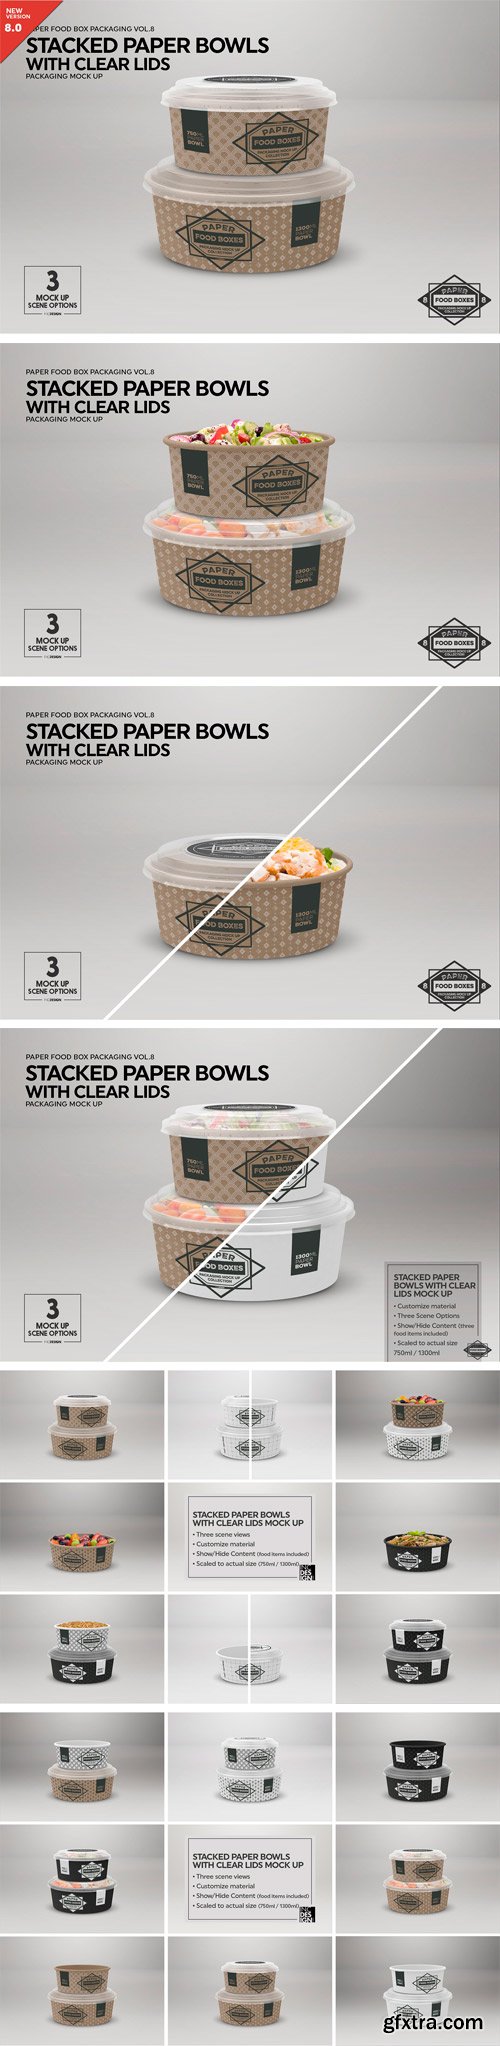 CM - Stacked Paper Bowls Mock Up 2181789